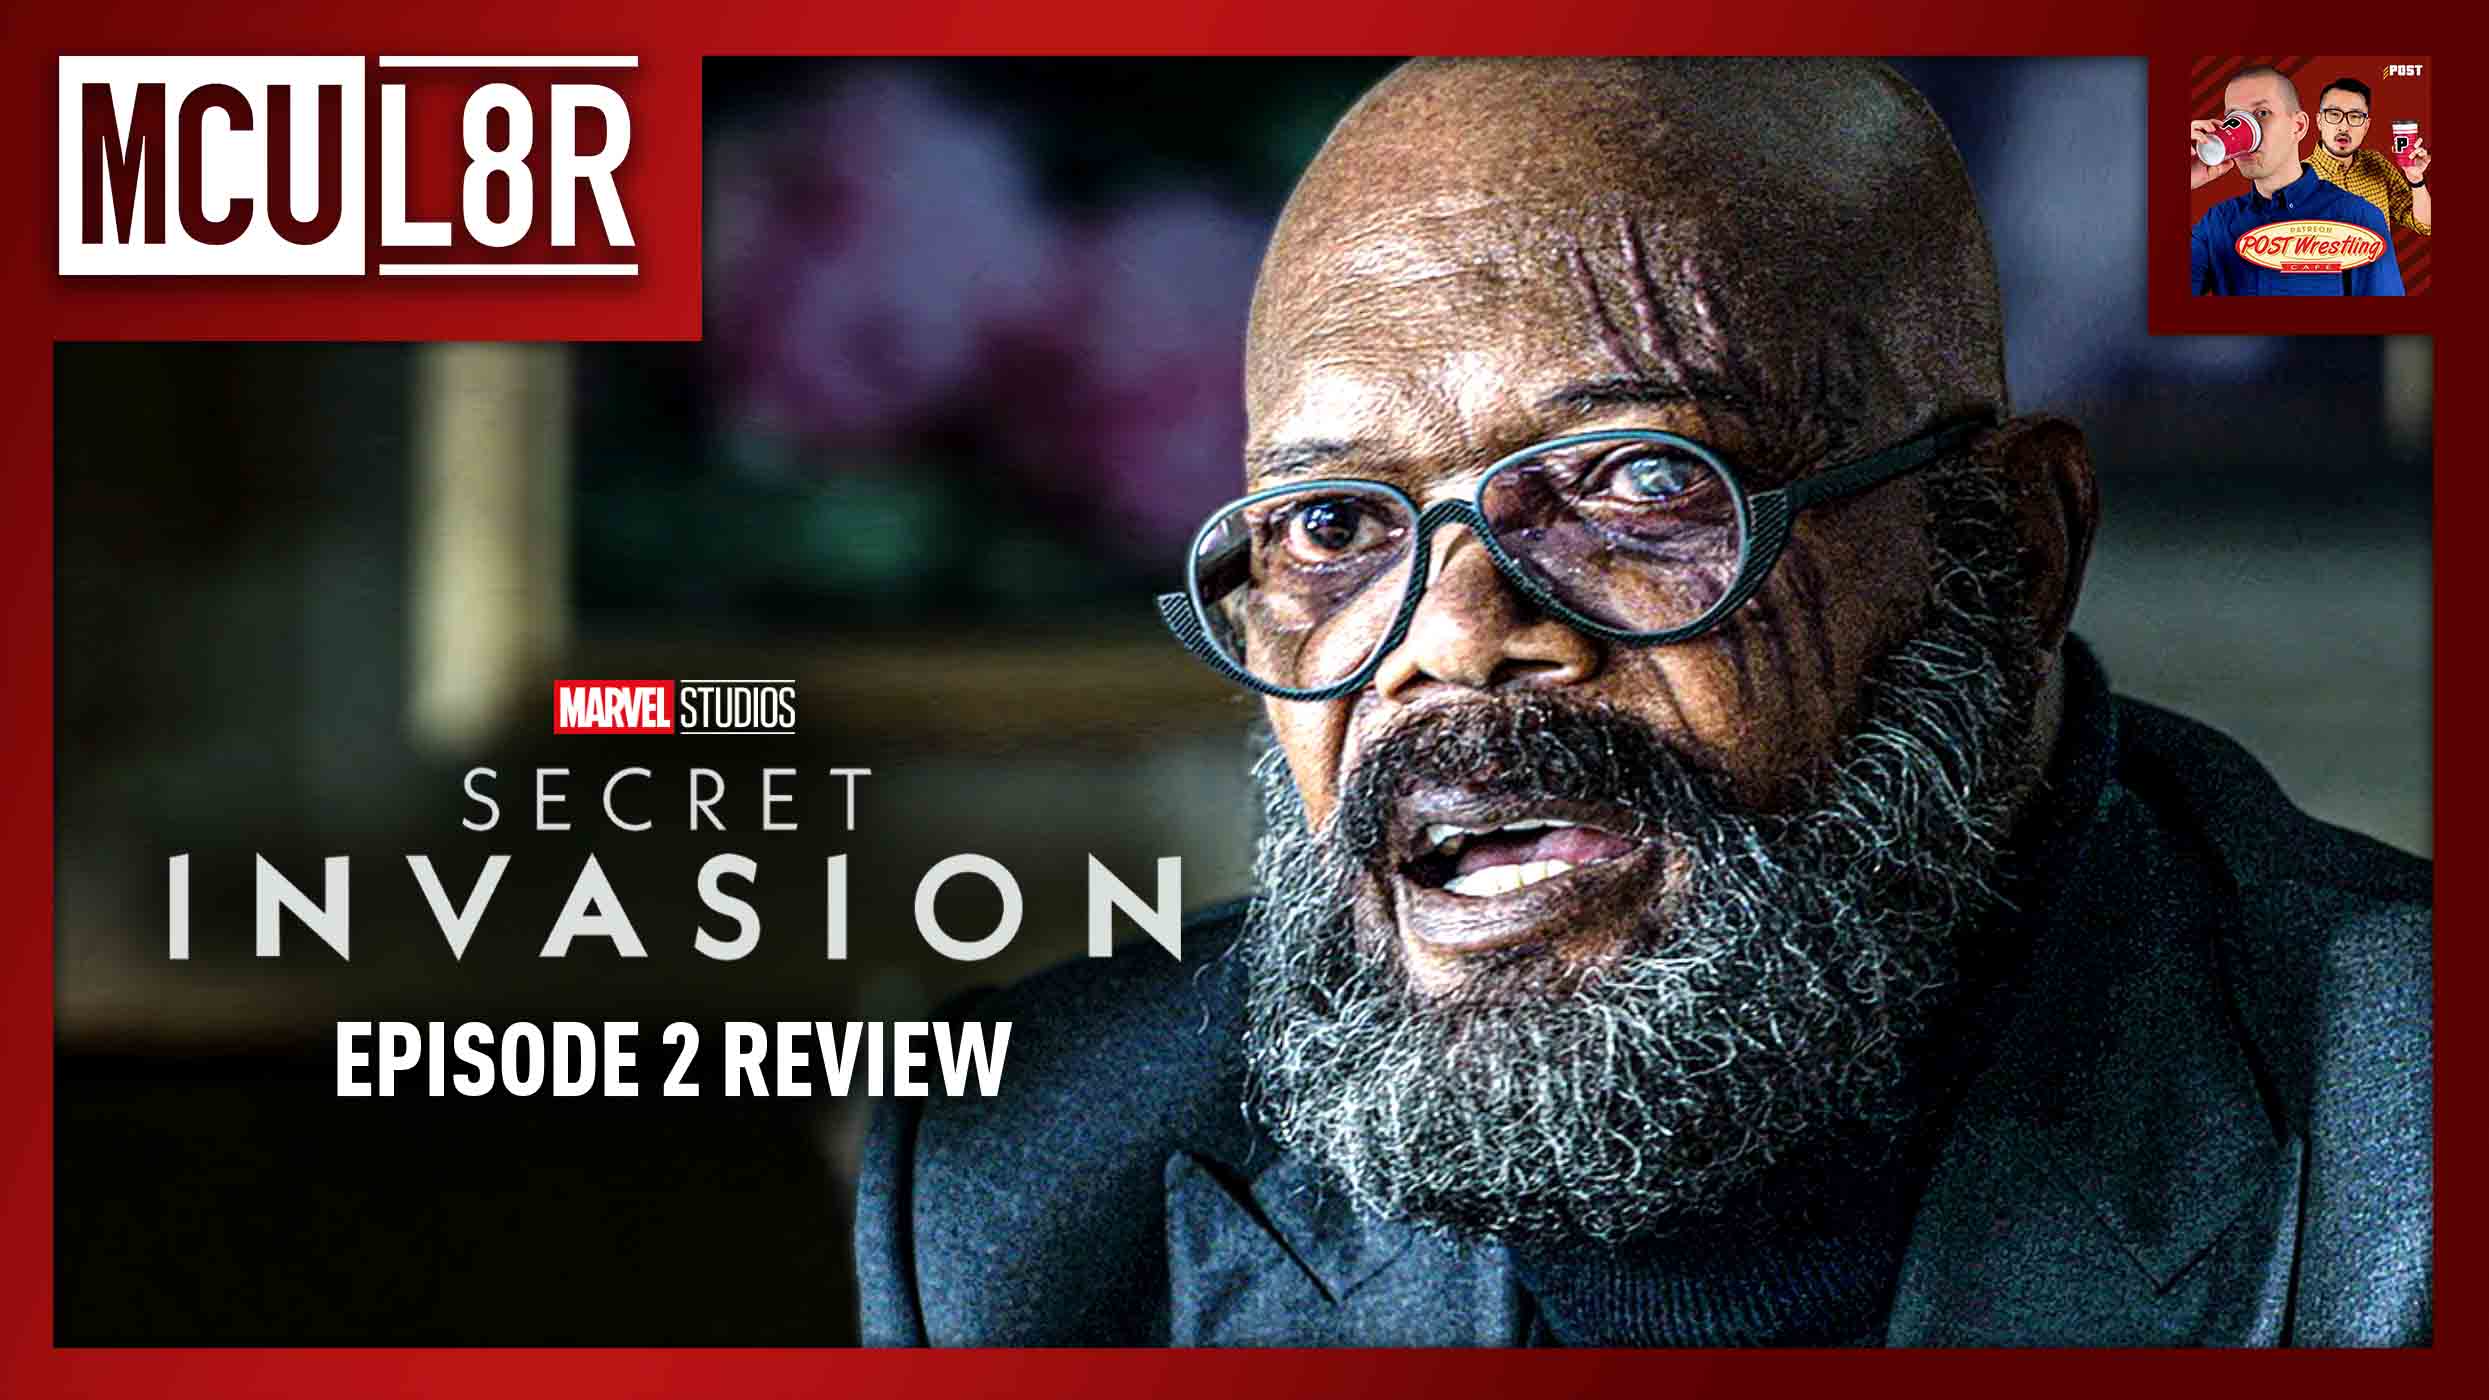 Secret Invasion season 1 episode 2 review — Fury shows his